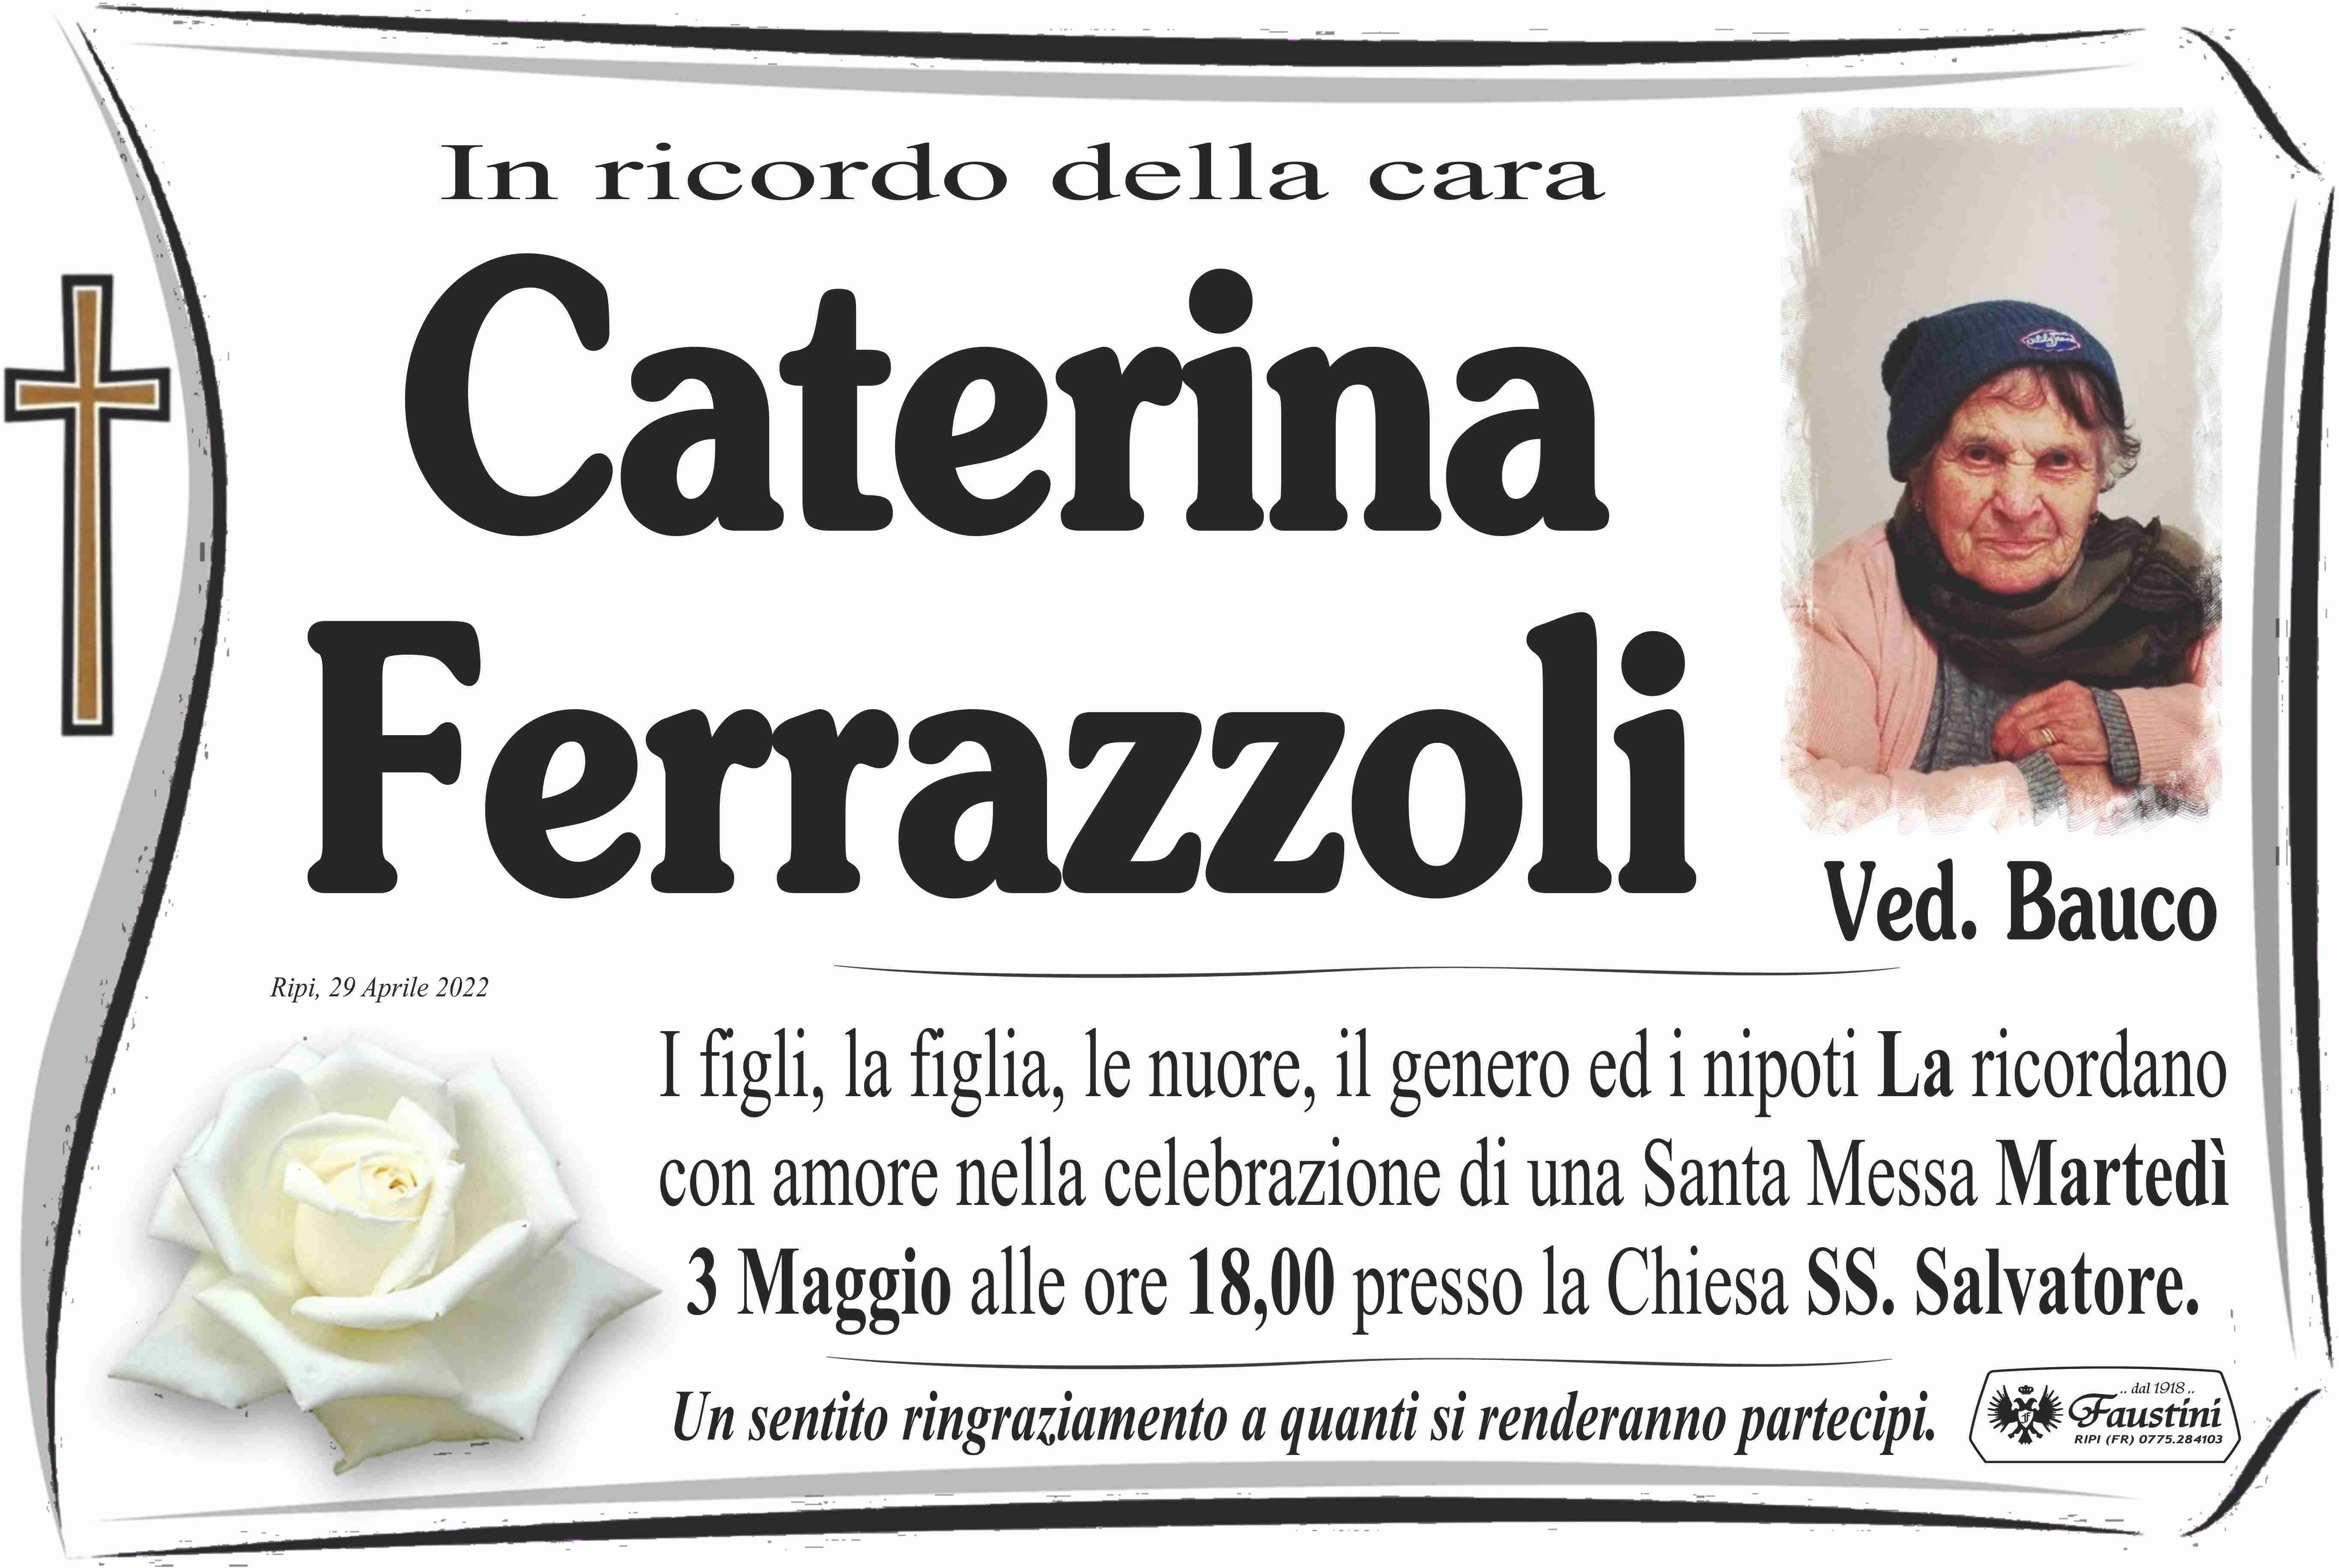 Caterina Ferrazzoli